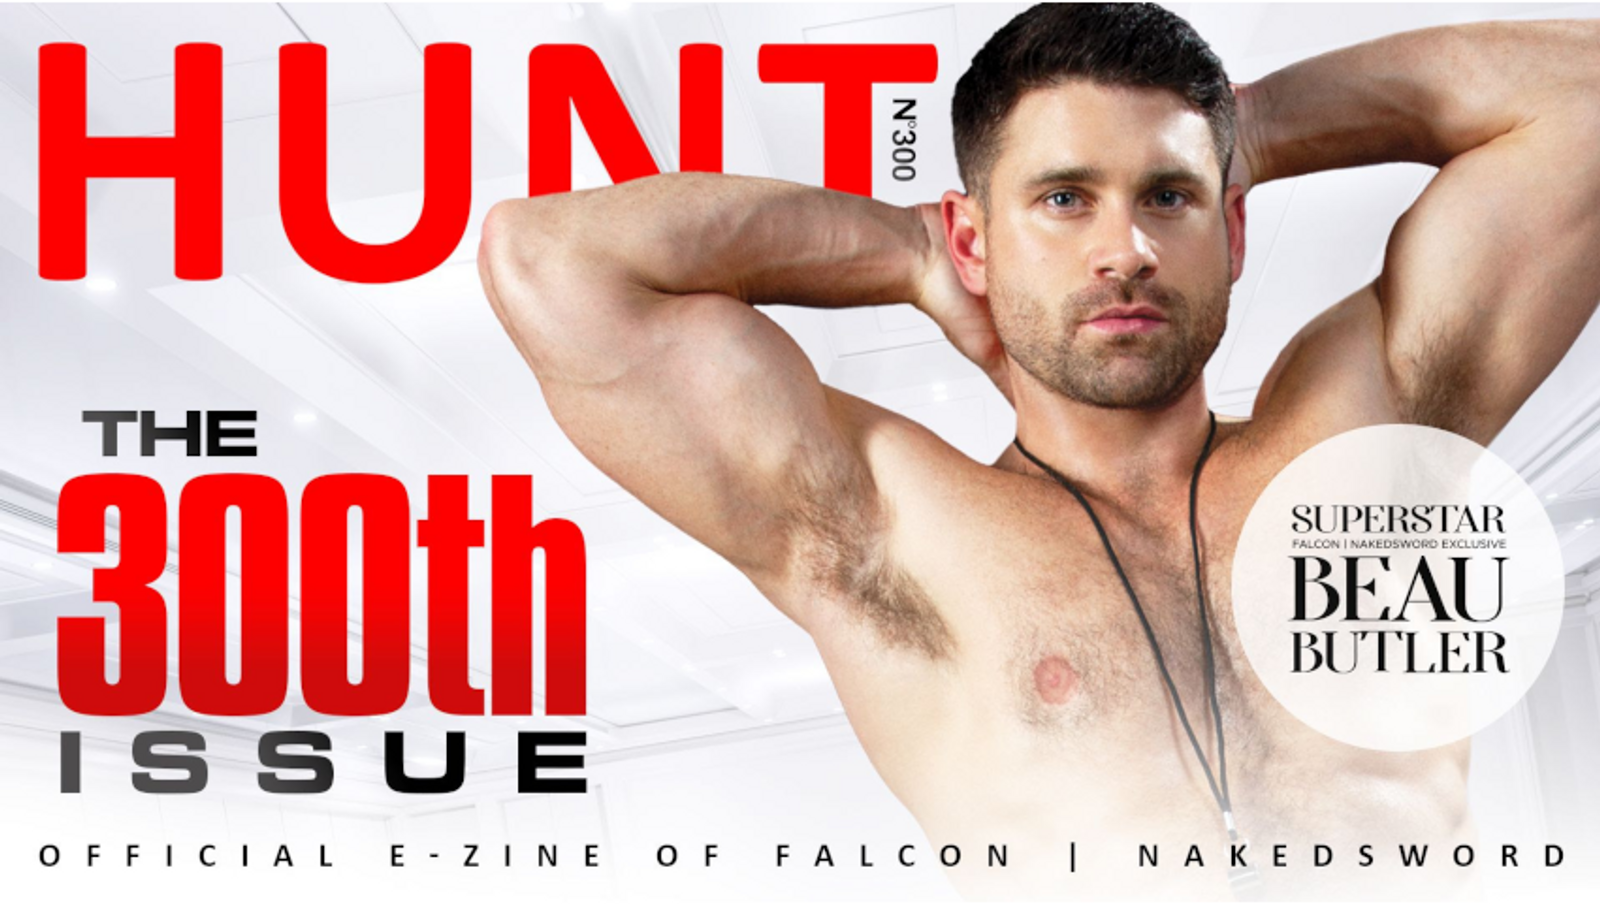 Falcon | NakedSword's 'Hunt' Ezine Celebrates 300th Issue